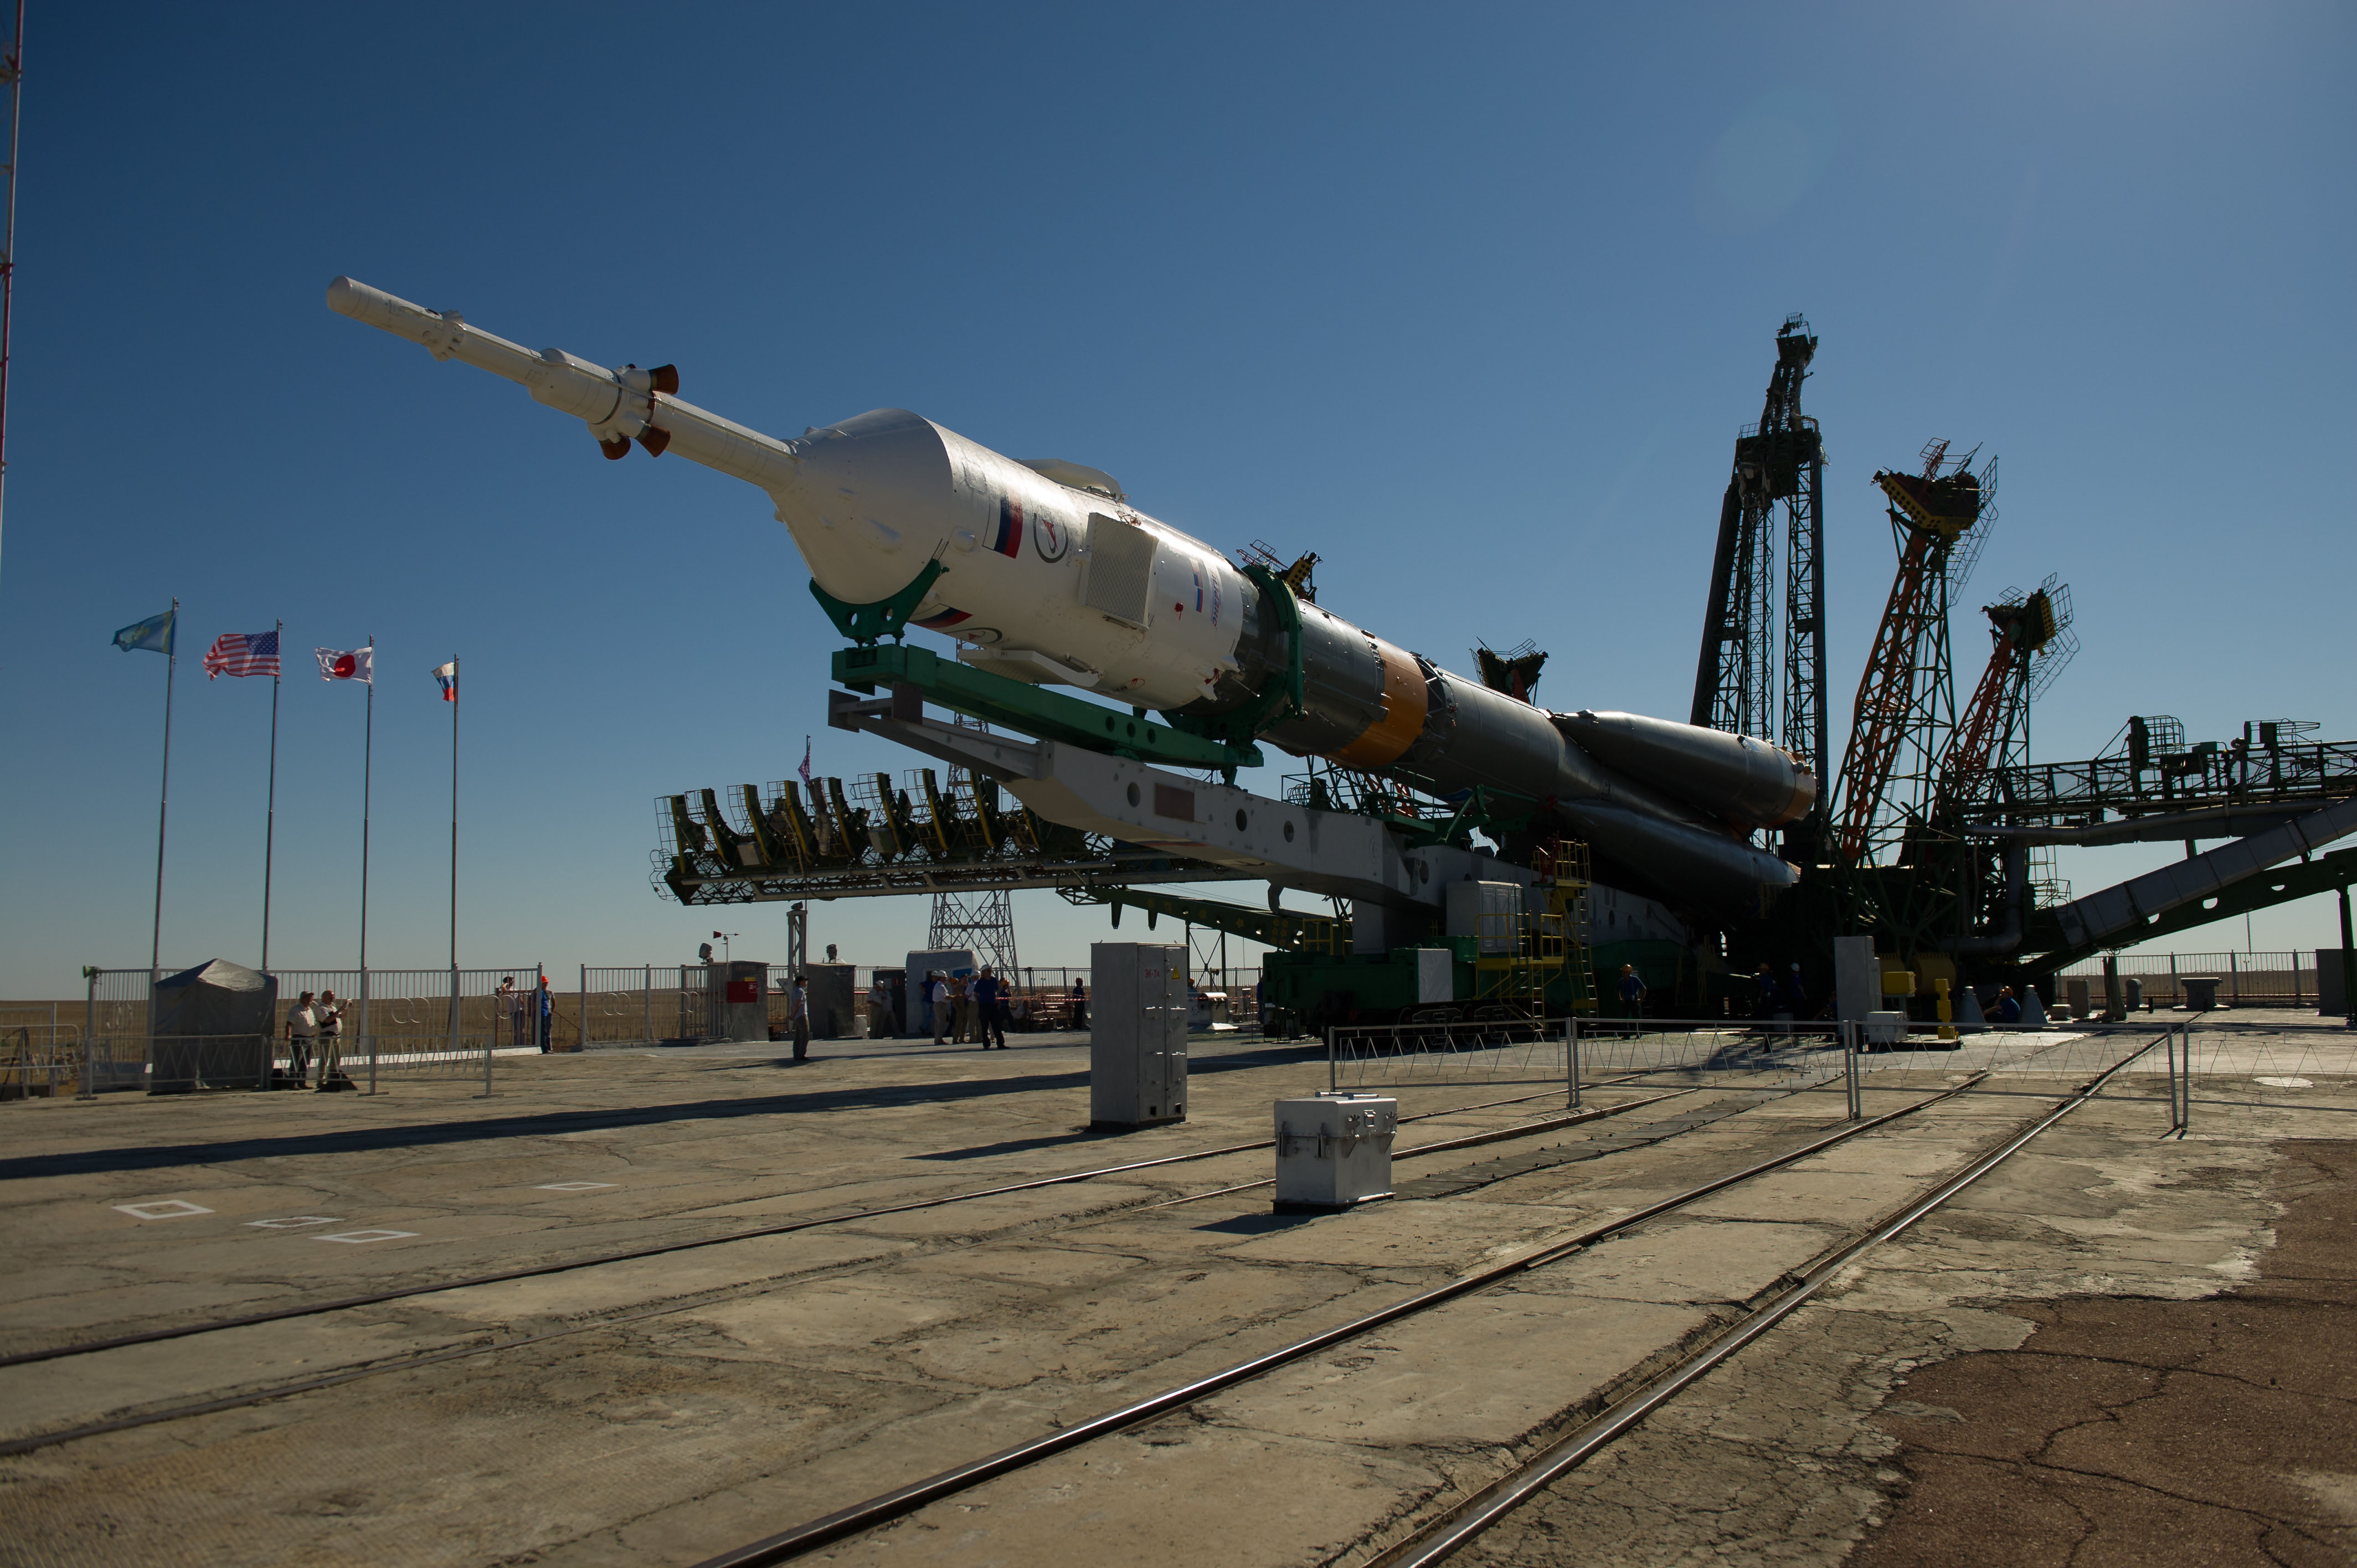 soyuz_tma-05m_spacecraft_raising_into_position_at_the_launch_pad.jpg